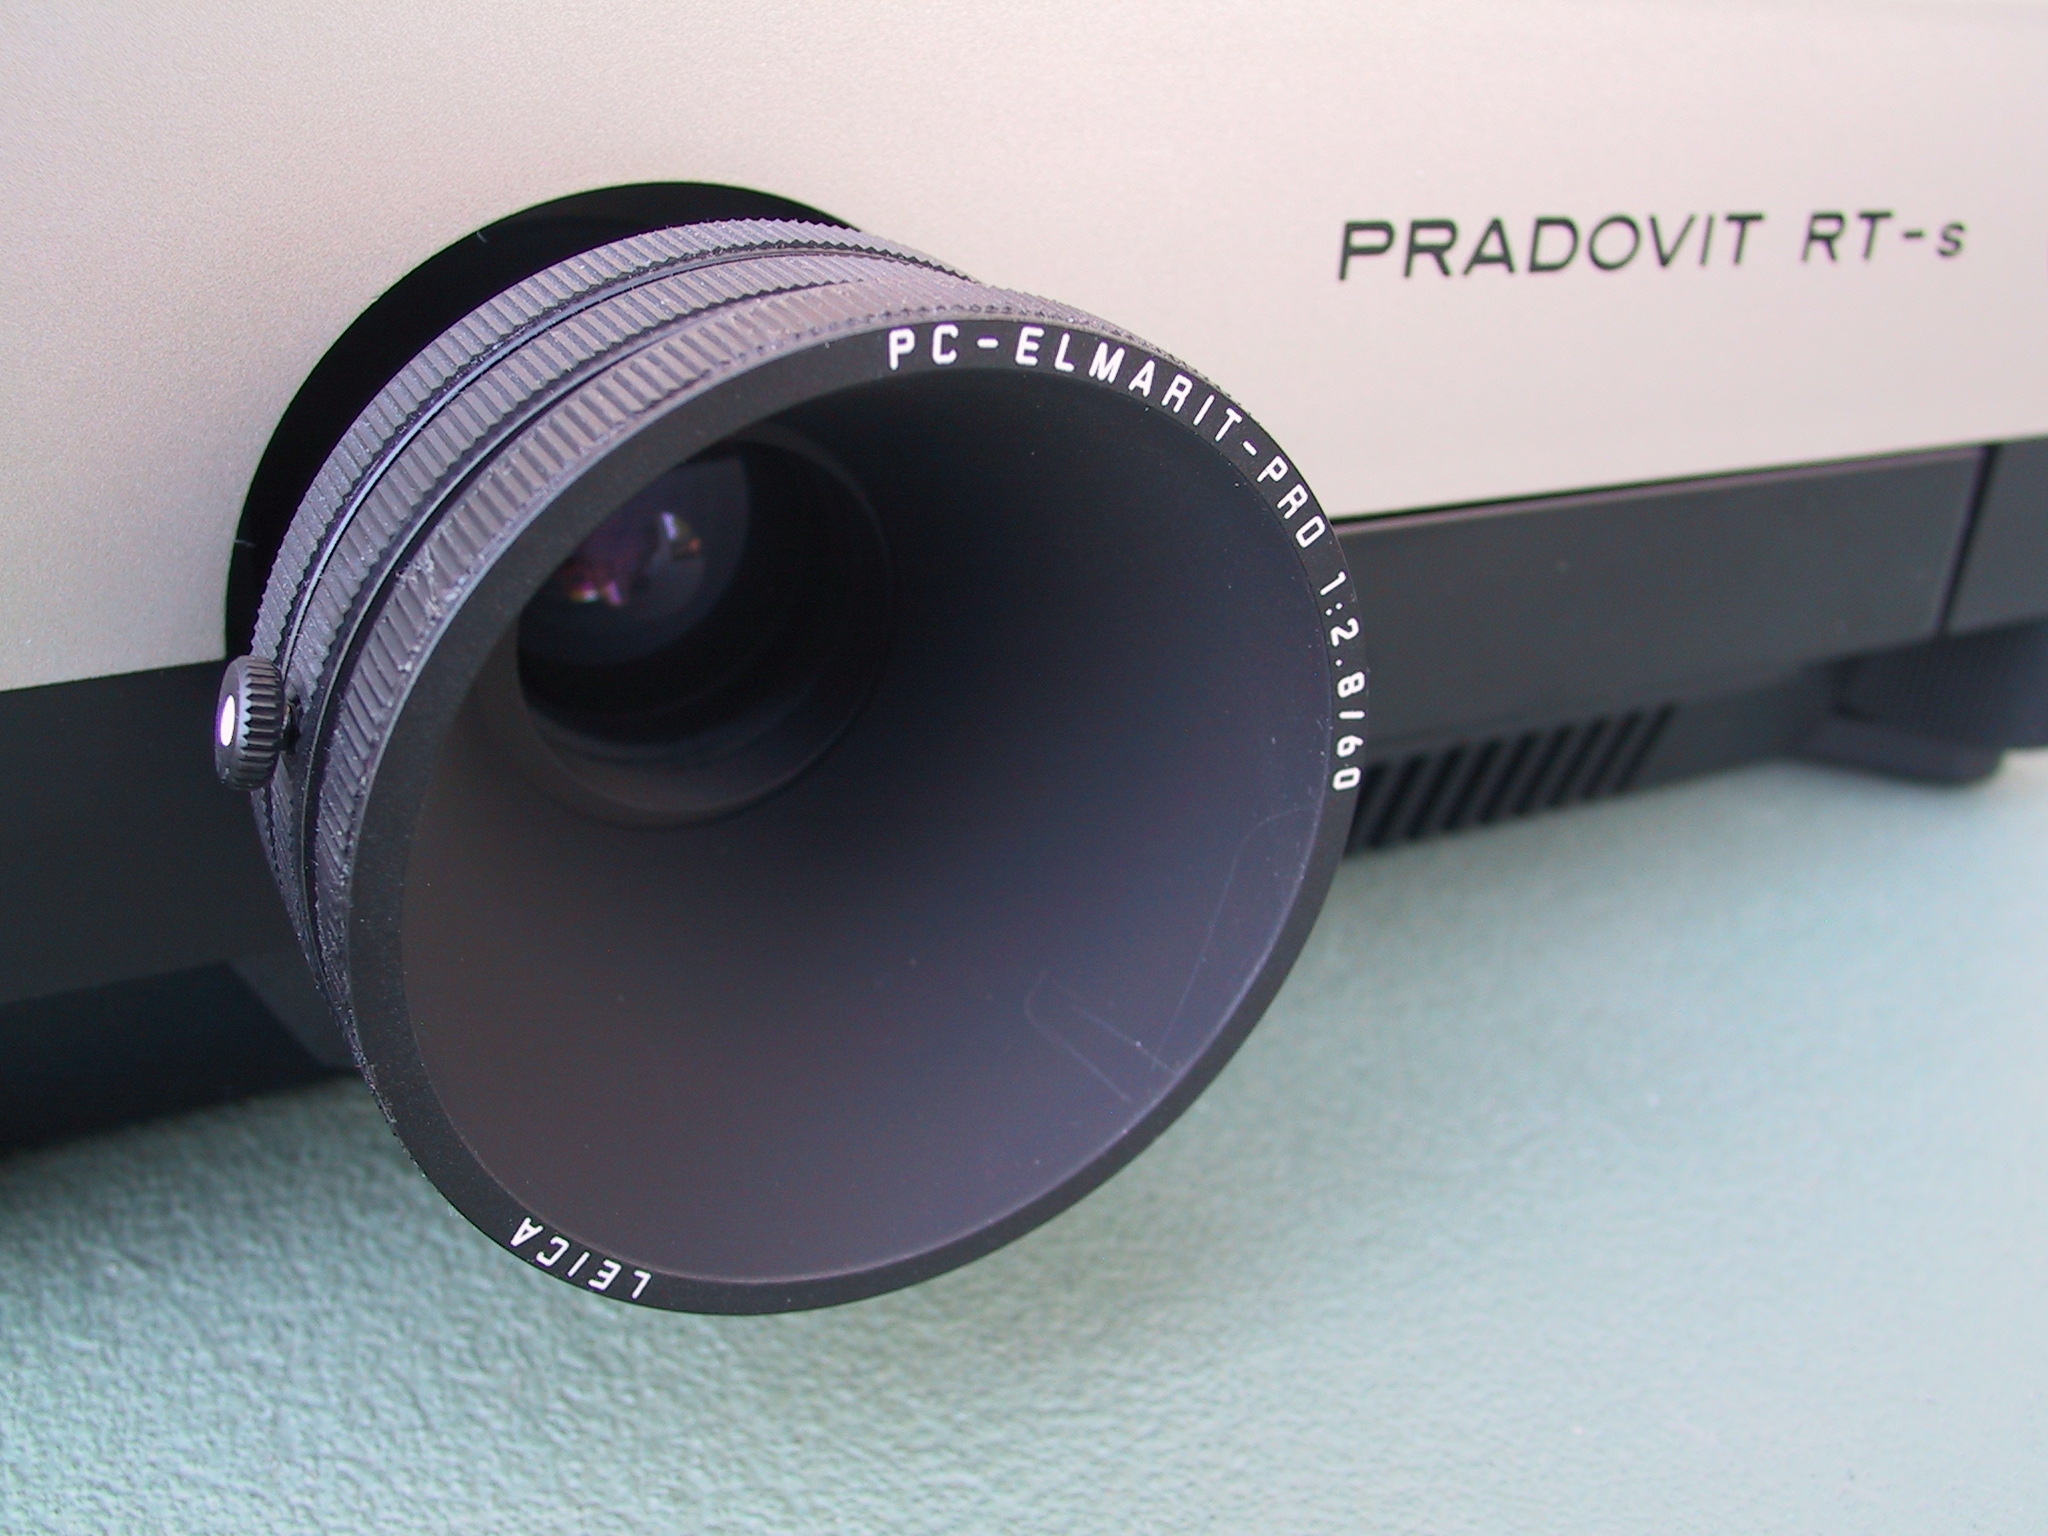 Leitz 60mm / 2.8 PC Lens for Slide Projector - KX Camera Kodak Slide Projectors Since 1980 - 1732-1/2 Grand Ave. Santa Barbara, CA 93103 805-963-5625